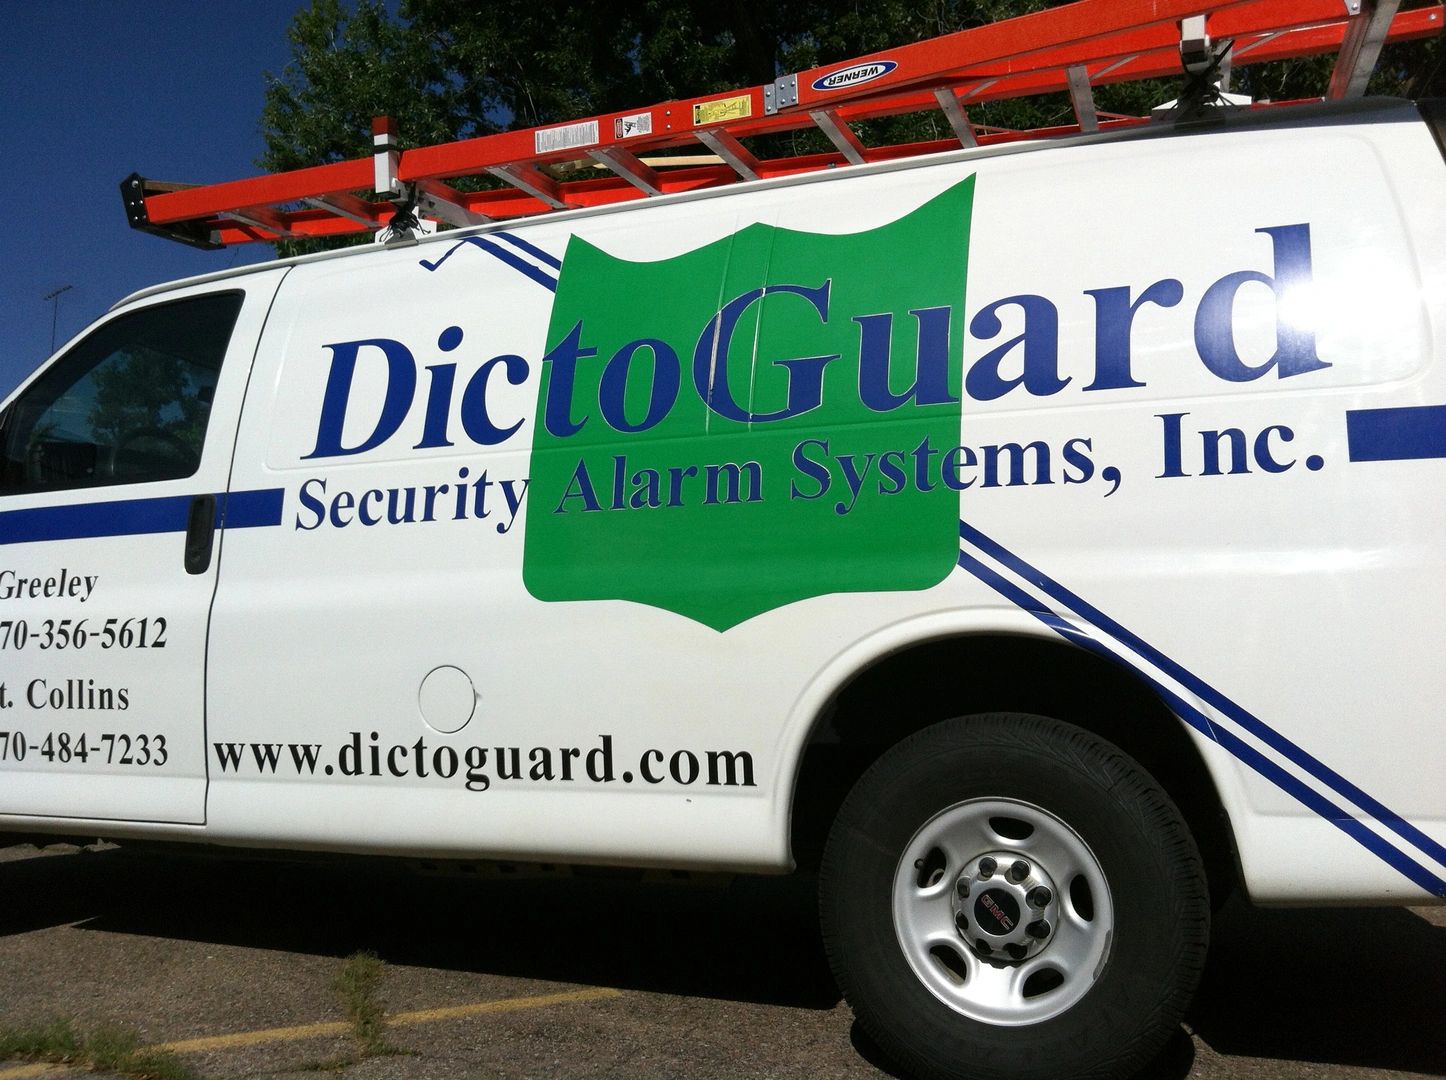 Dictoguard Security Alarm Systems